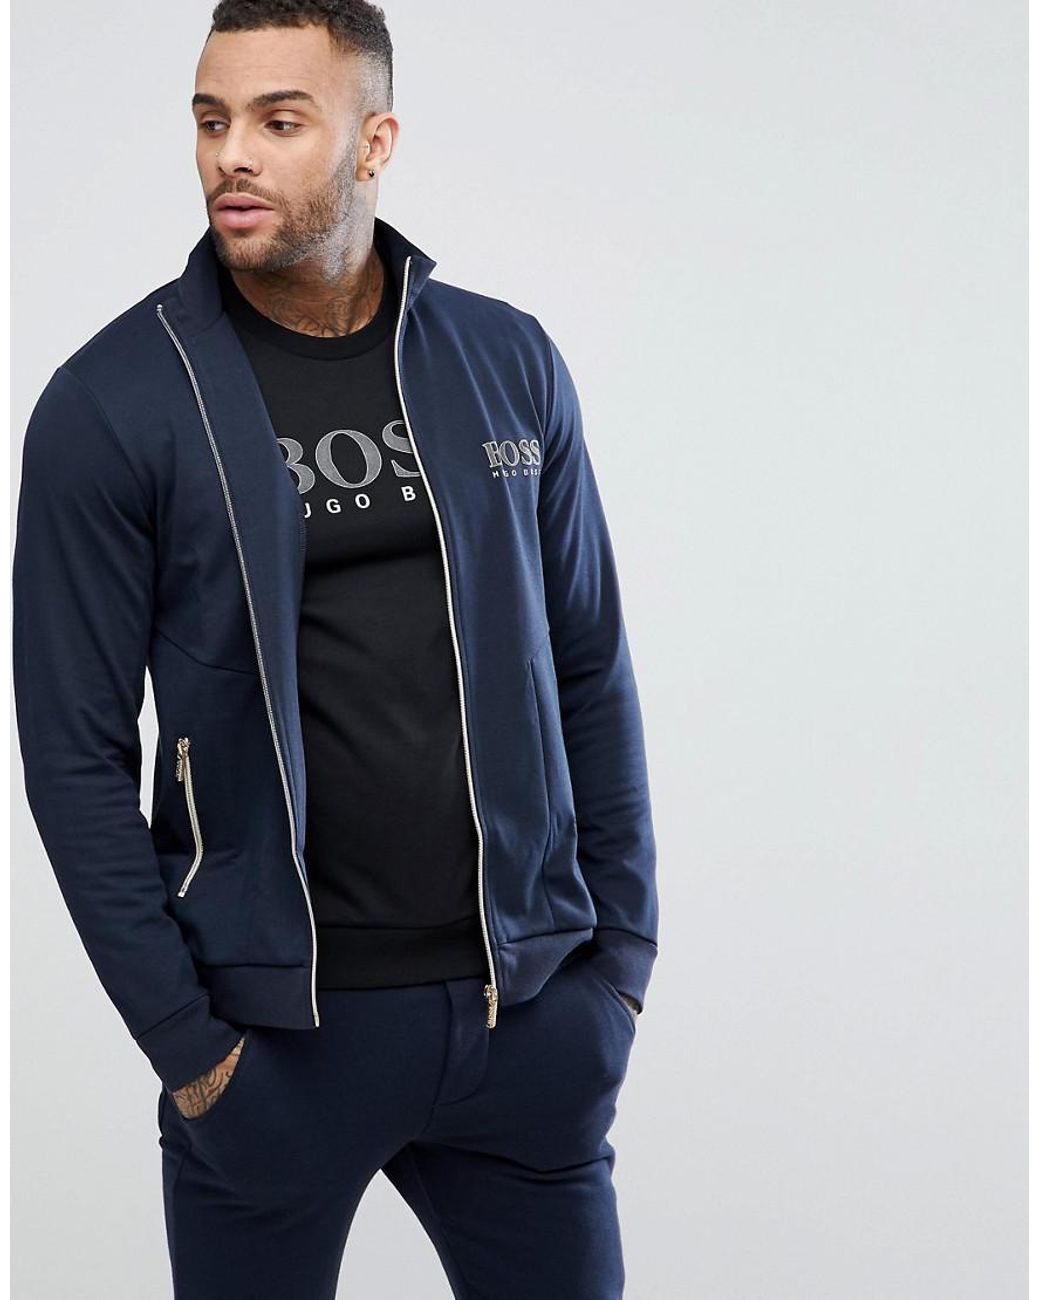 BOSS by HUGO BOSS Tracksuit Zip Thru Jacket in Blue for Men | Lyst